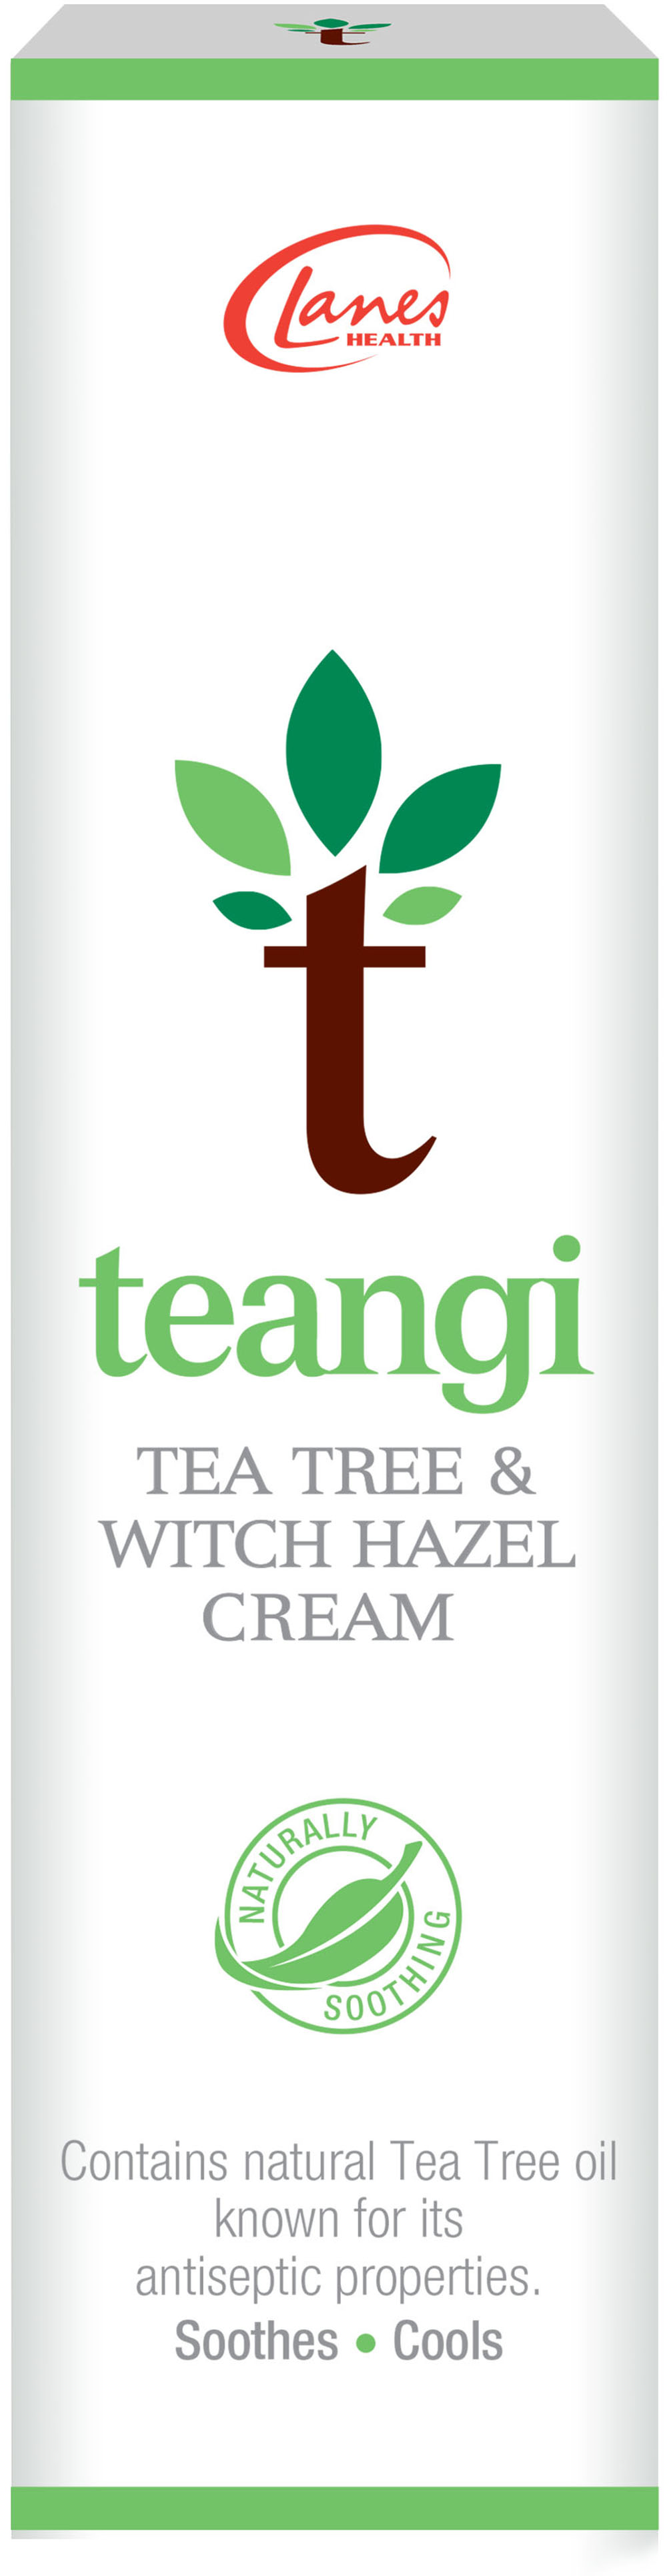 Tea Tree Witch Hazel Cream